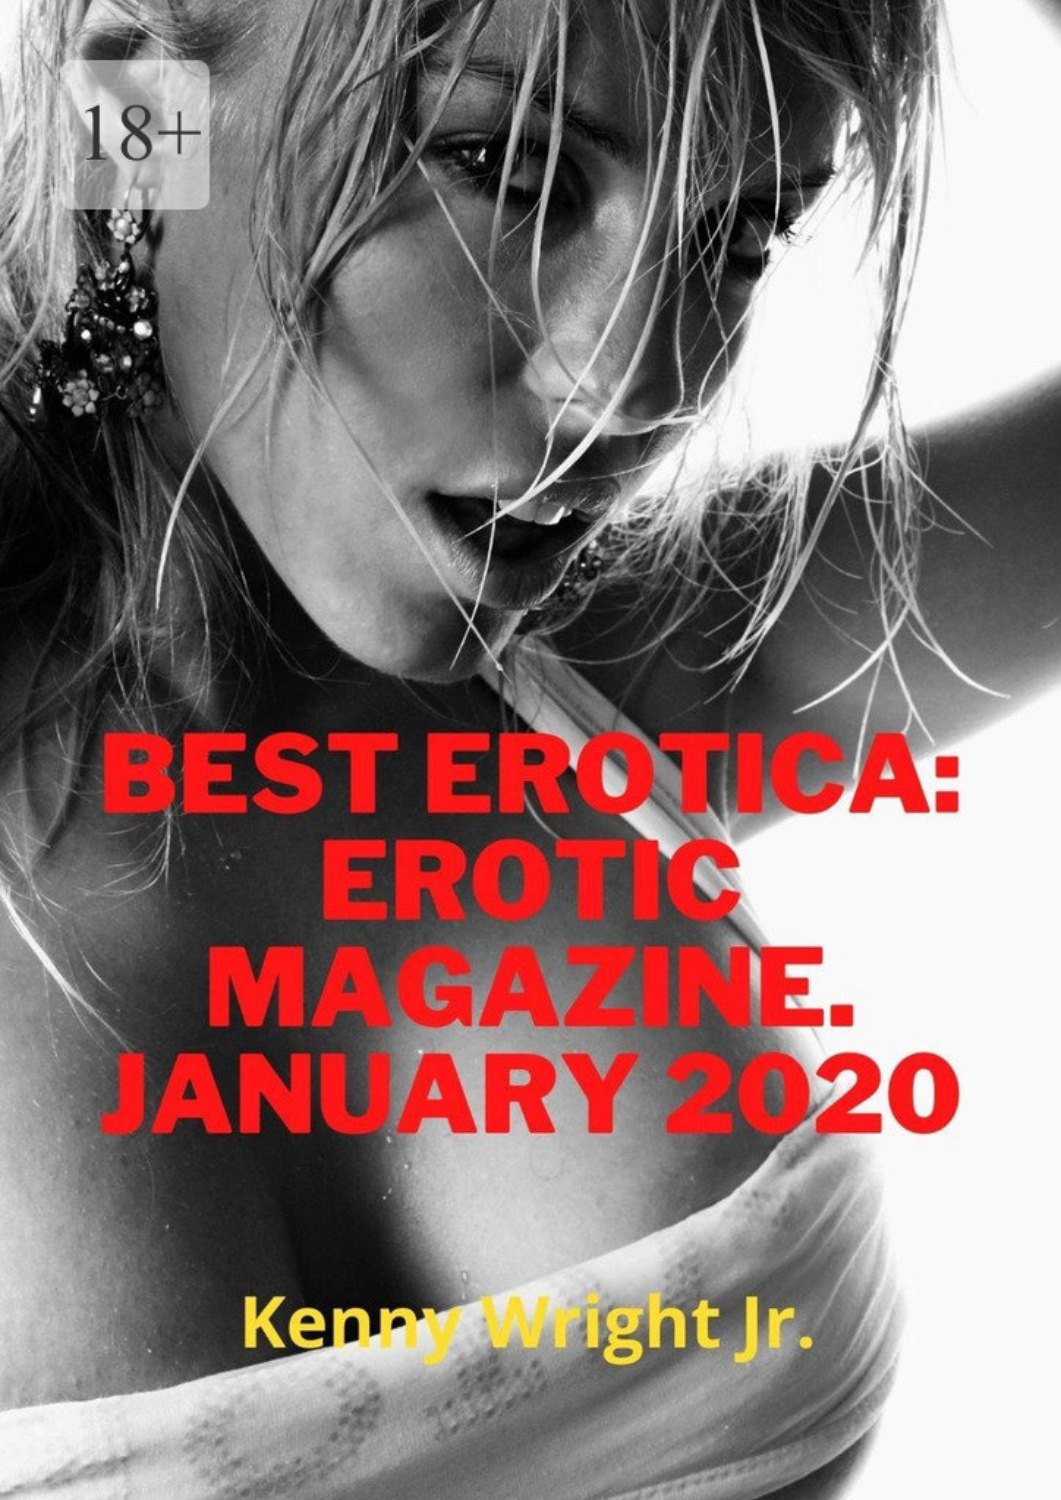 The best erotic photos